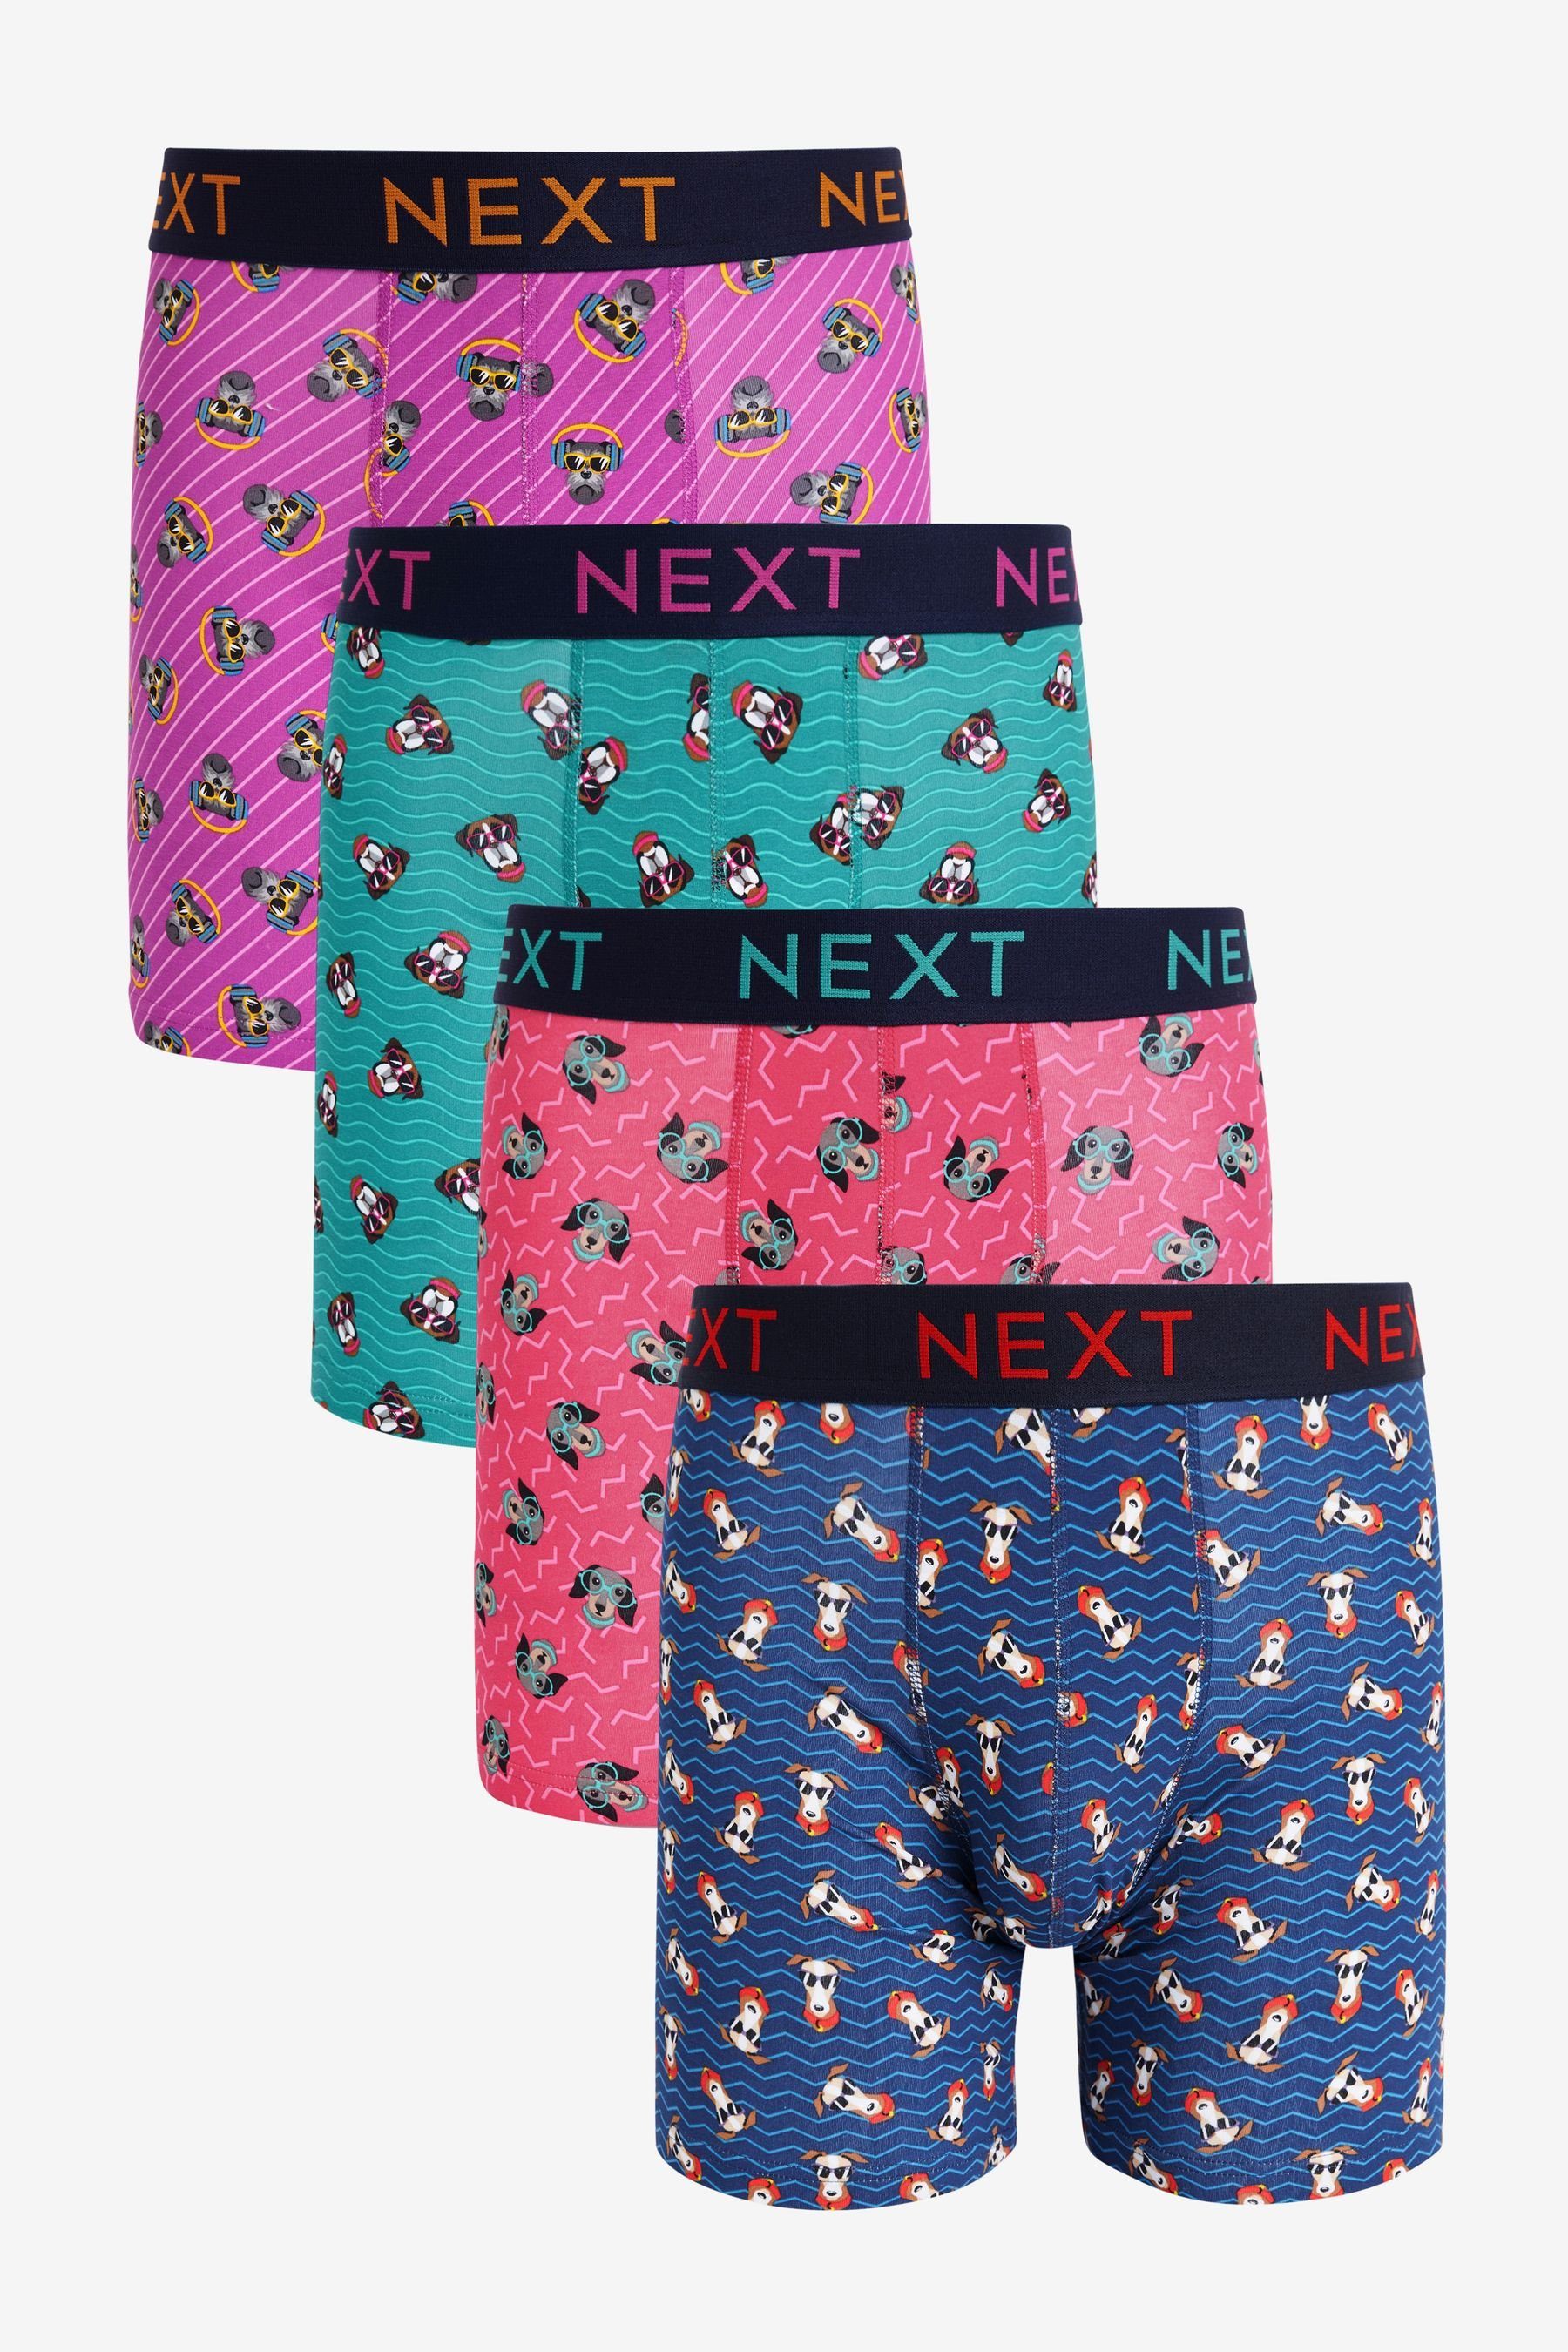 Next Hipster Unterhose, 4er-Pack (4-St) Blue/Pink